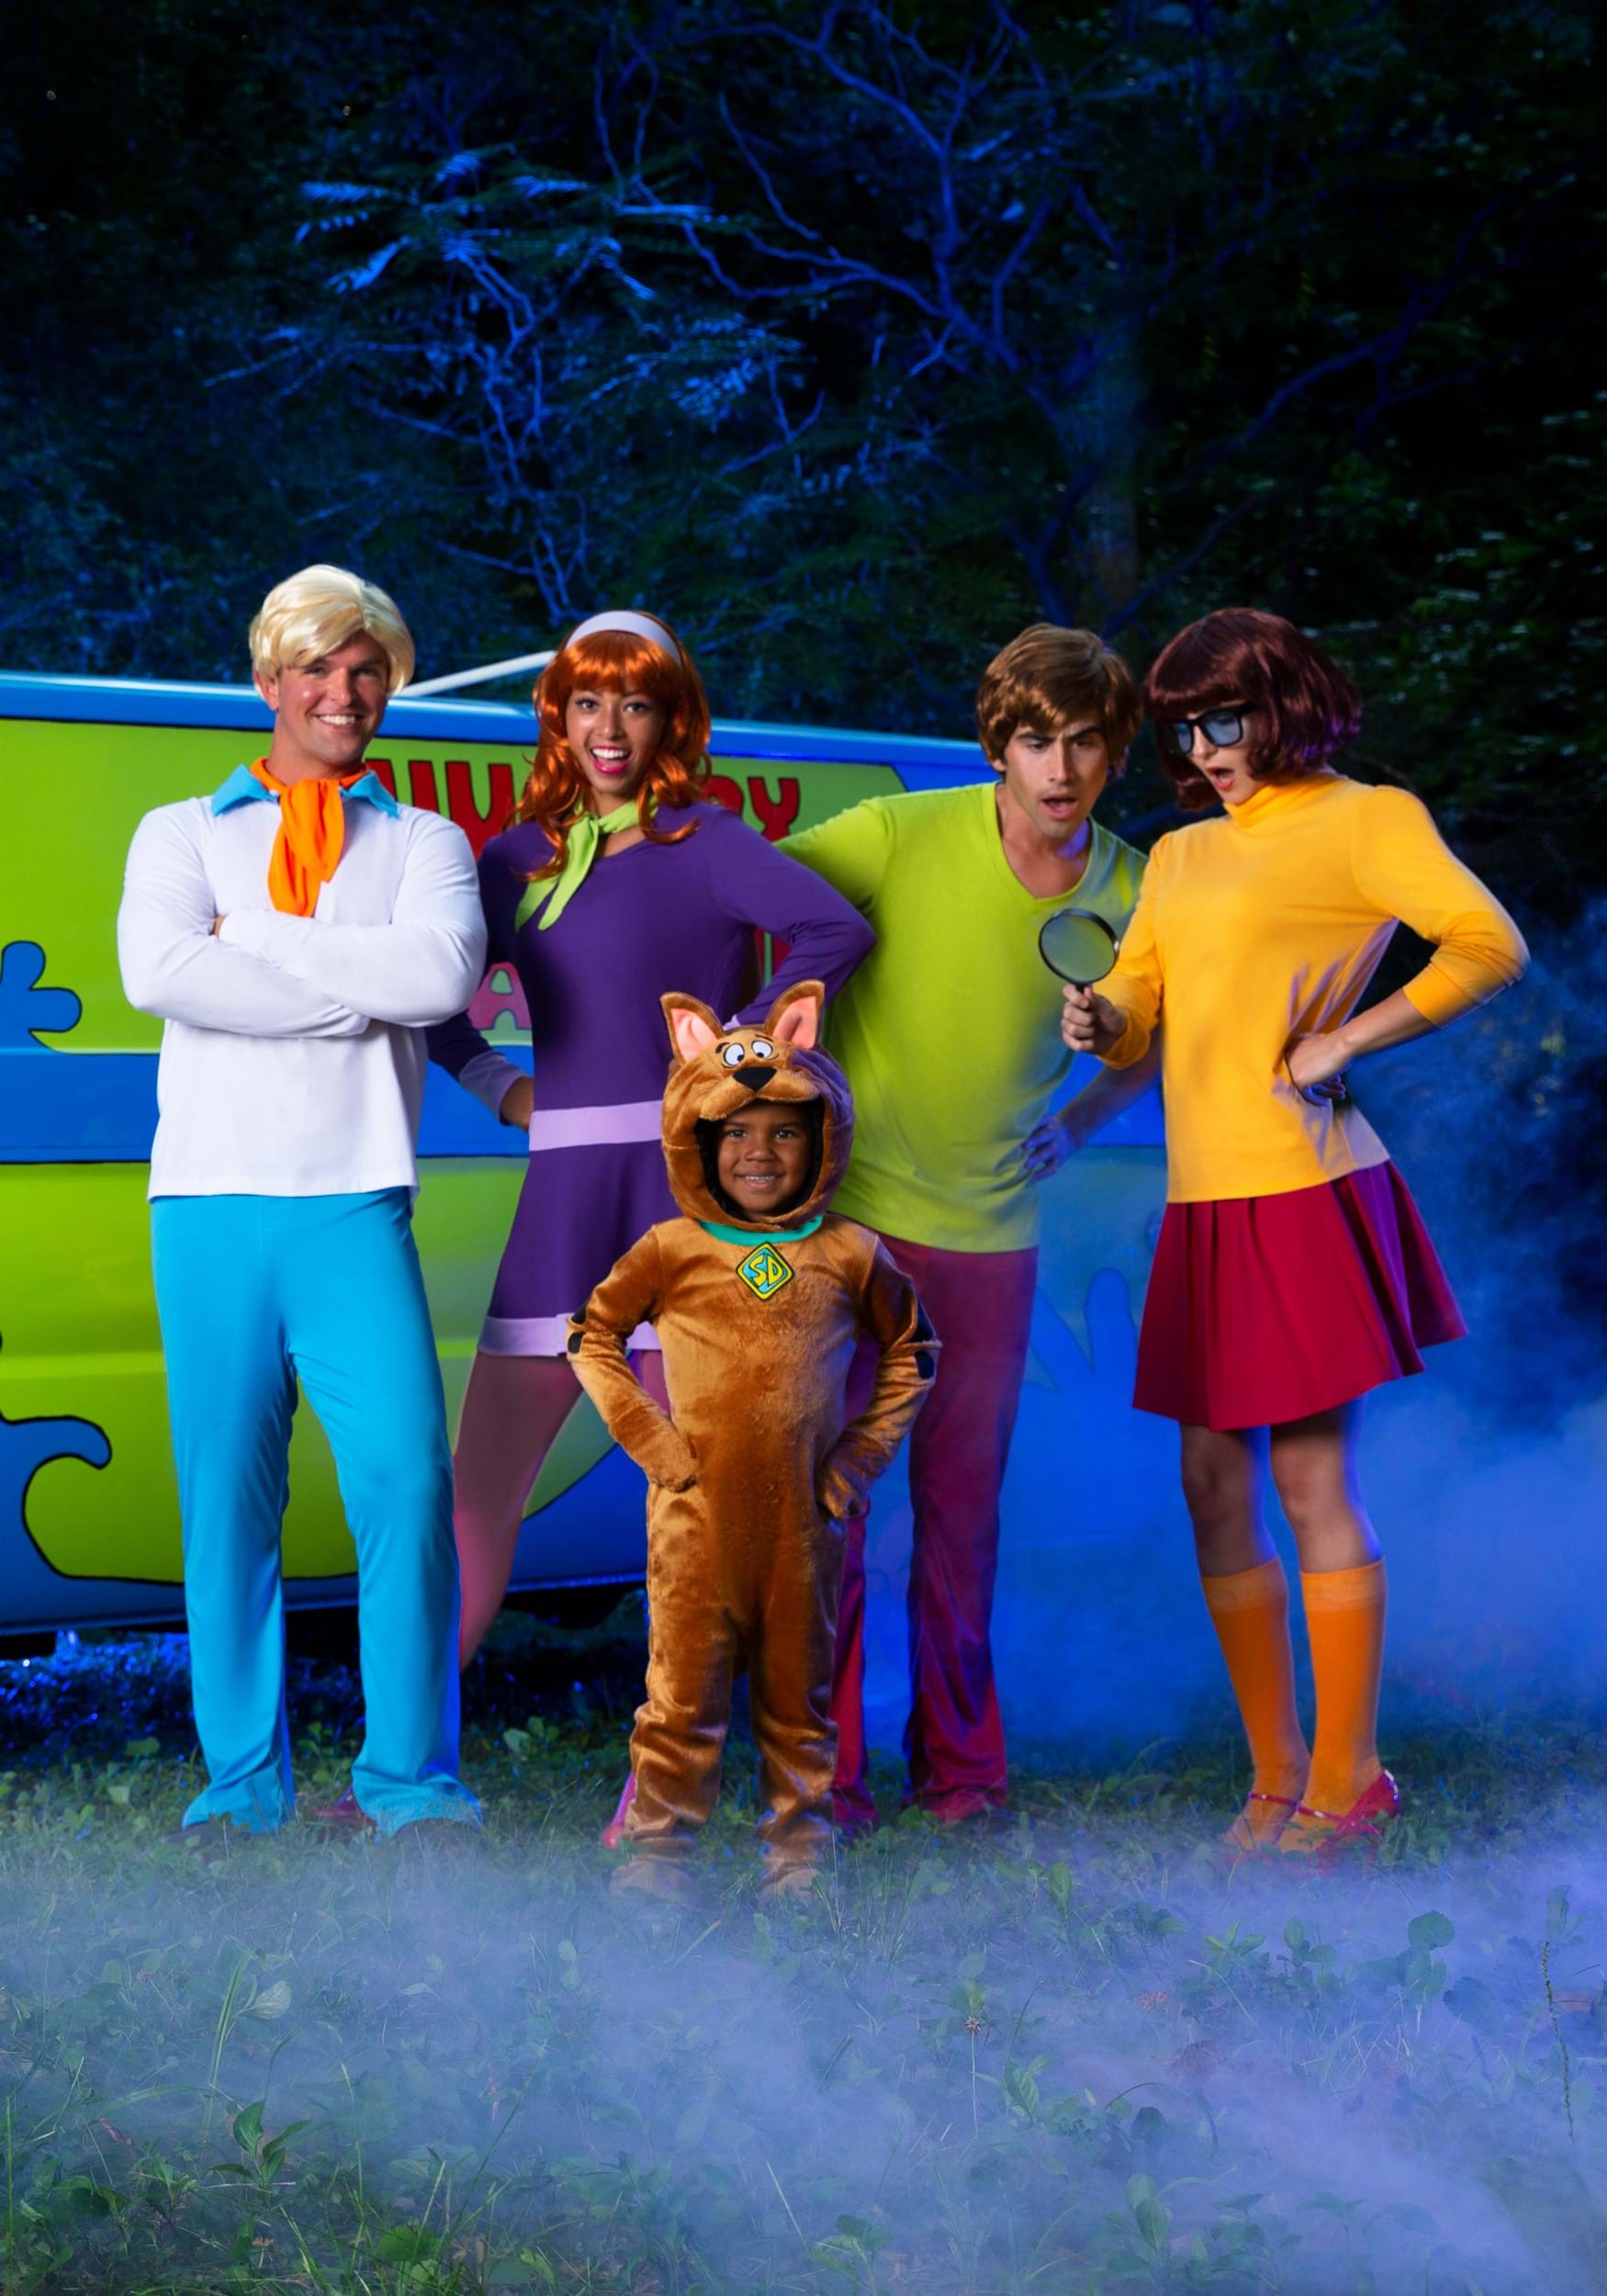 Scooby doo dress